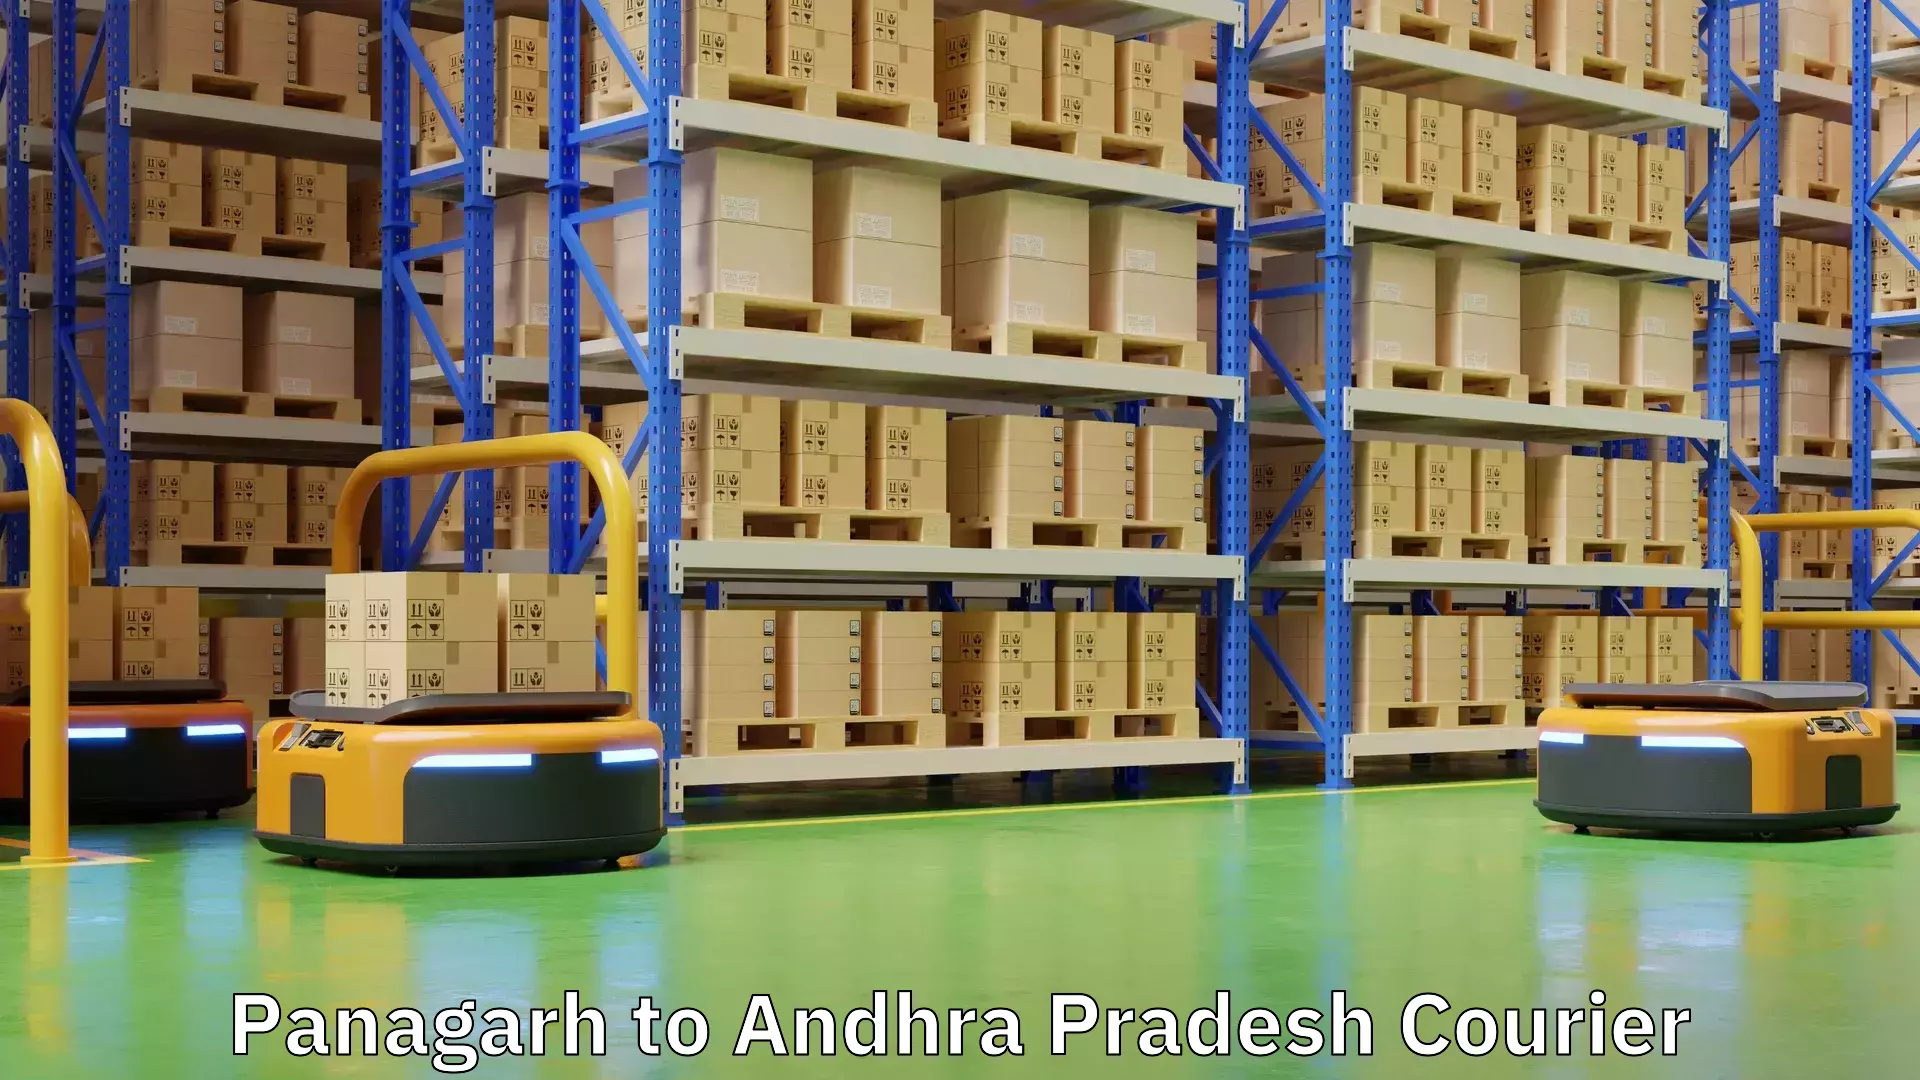 On-demand shipping options Panagarh to Andhra Pradesh